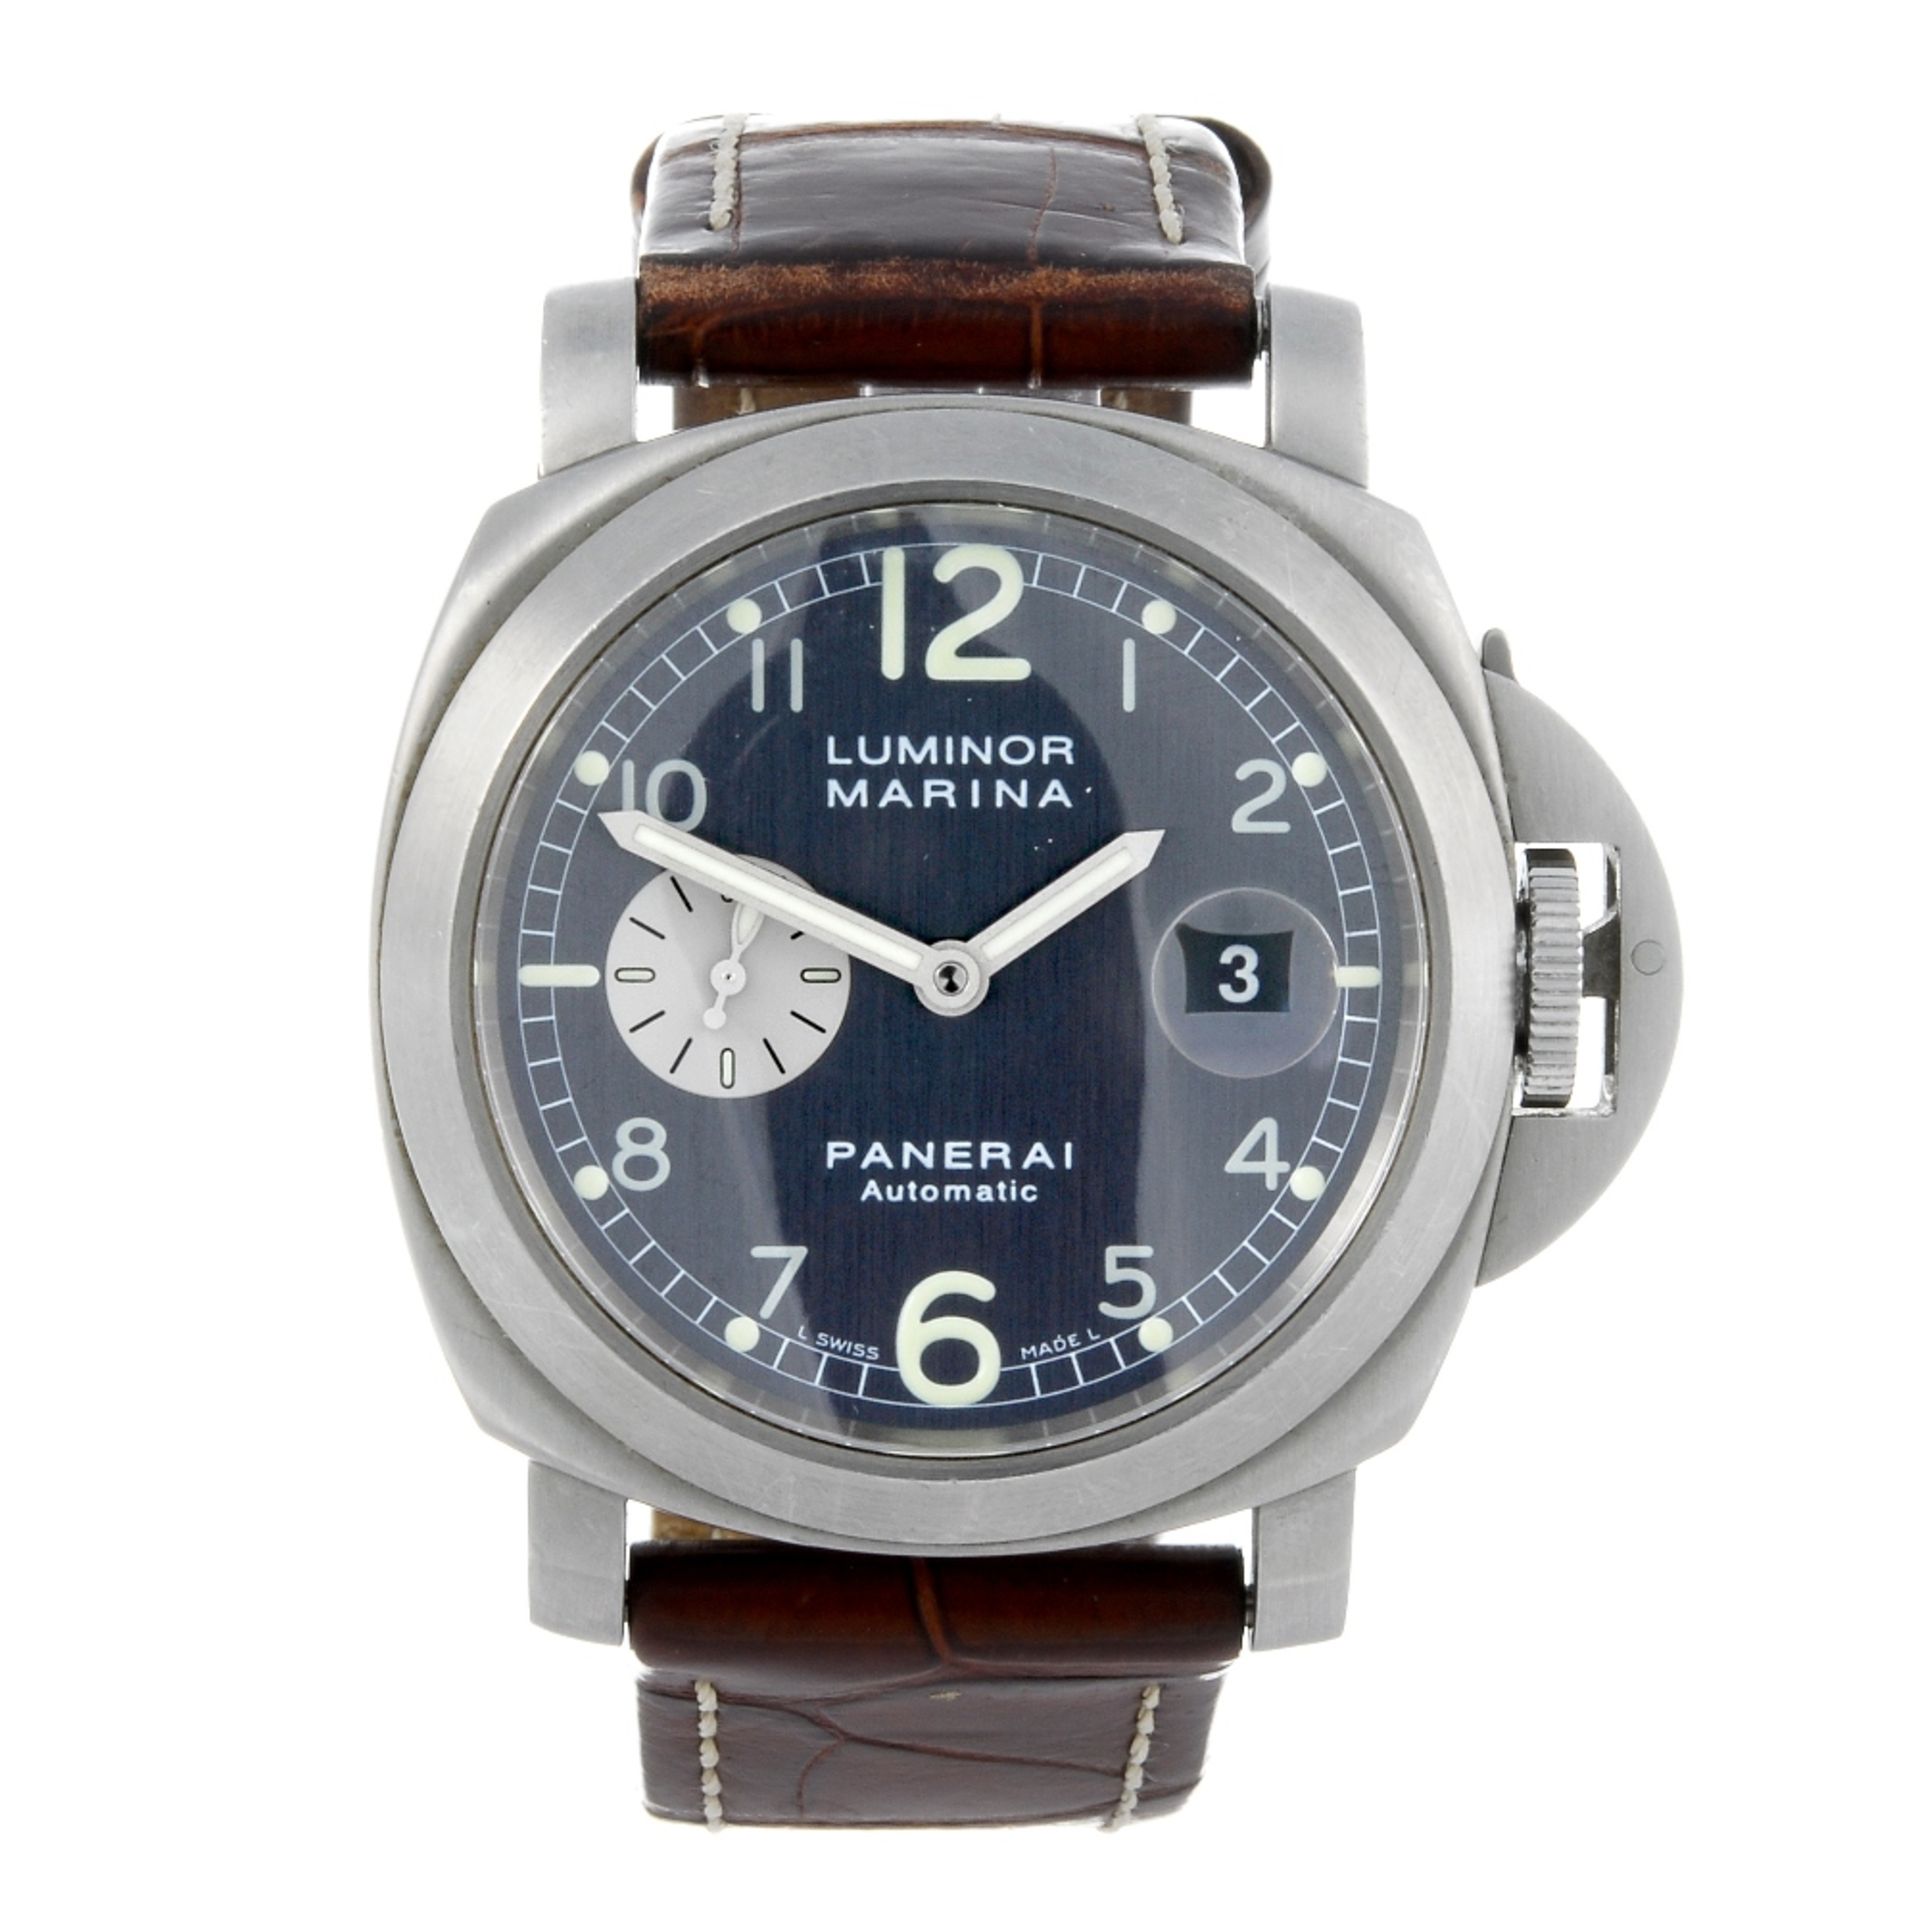 PANERAI - a gentleman's Luminor Marina wrist watch. Circa 2001. Stainless steel case. Production